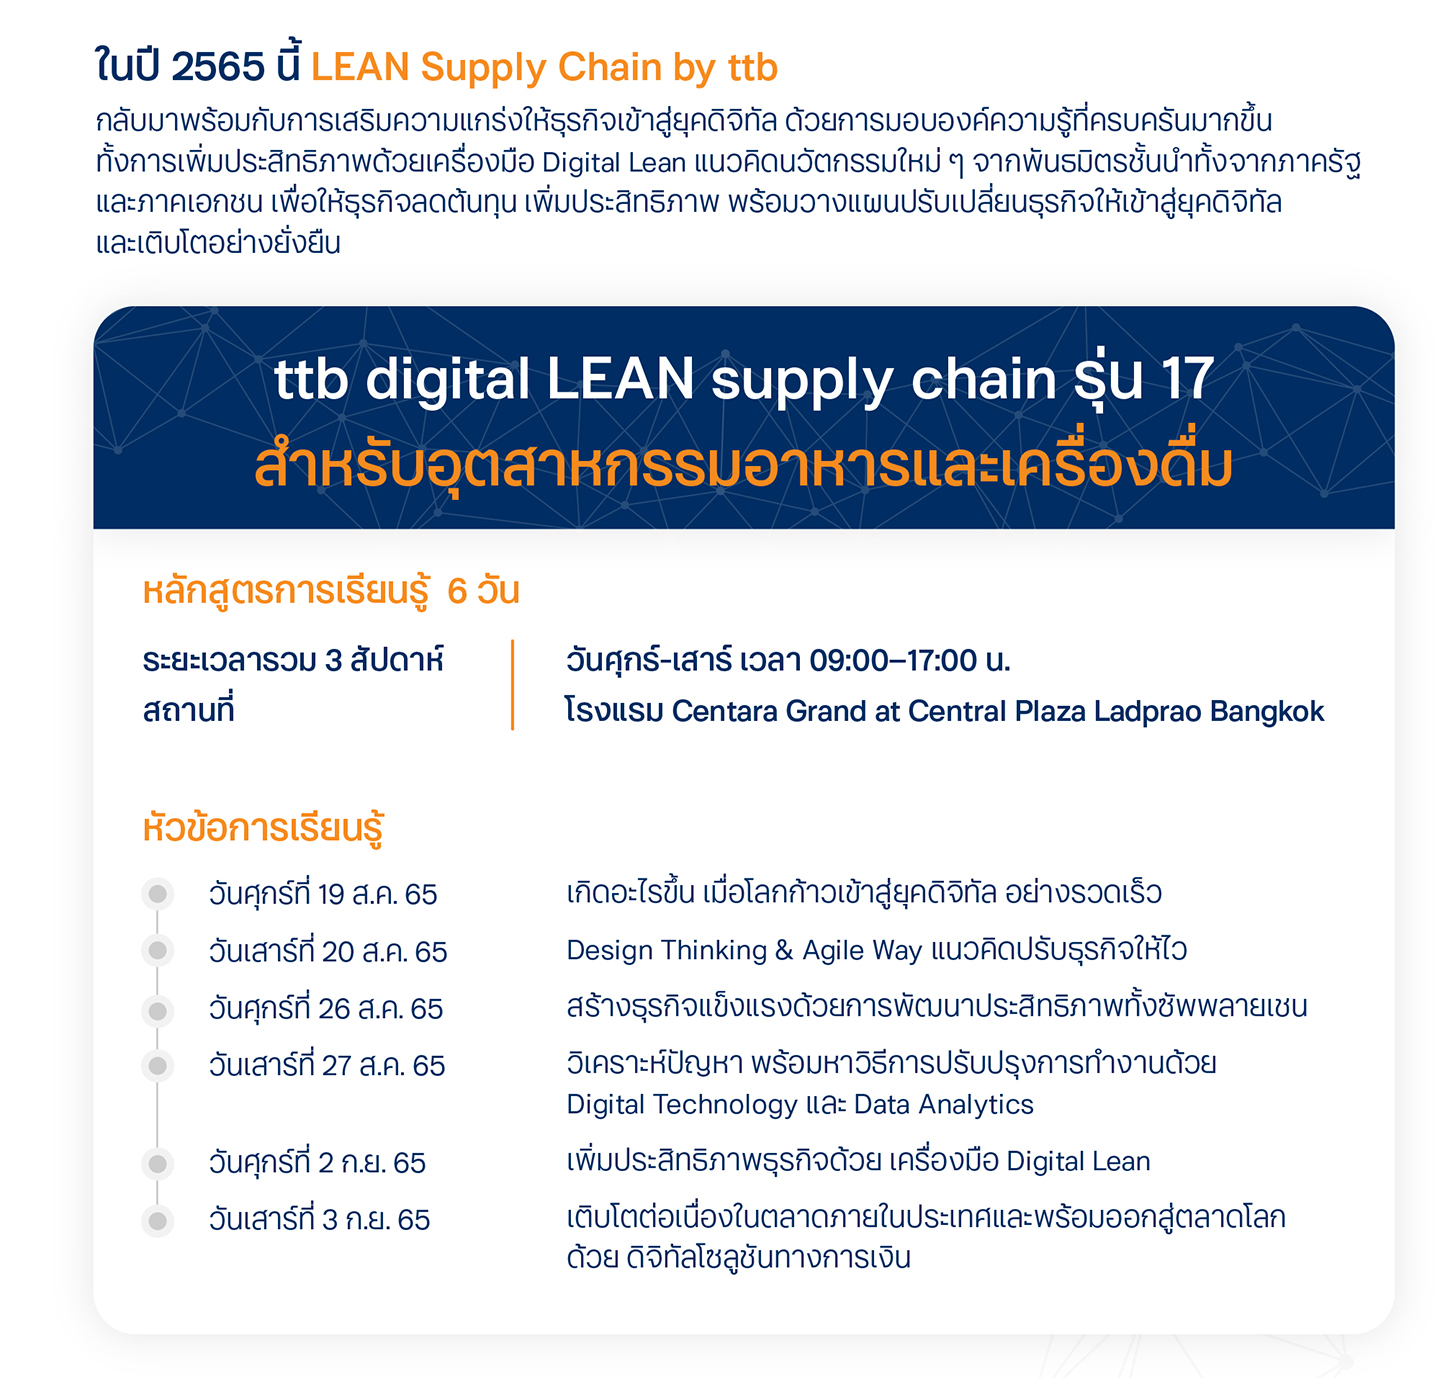 ttb digital LEAN supply chain รุ่น 17สำหรับอุตสาหกรรมอาหารและเครื่องดื่ม-course outline